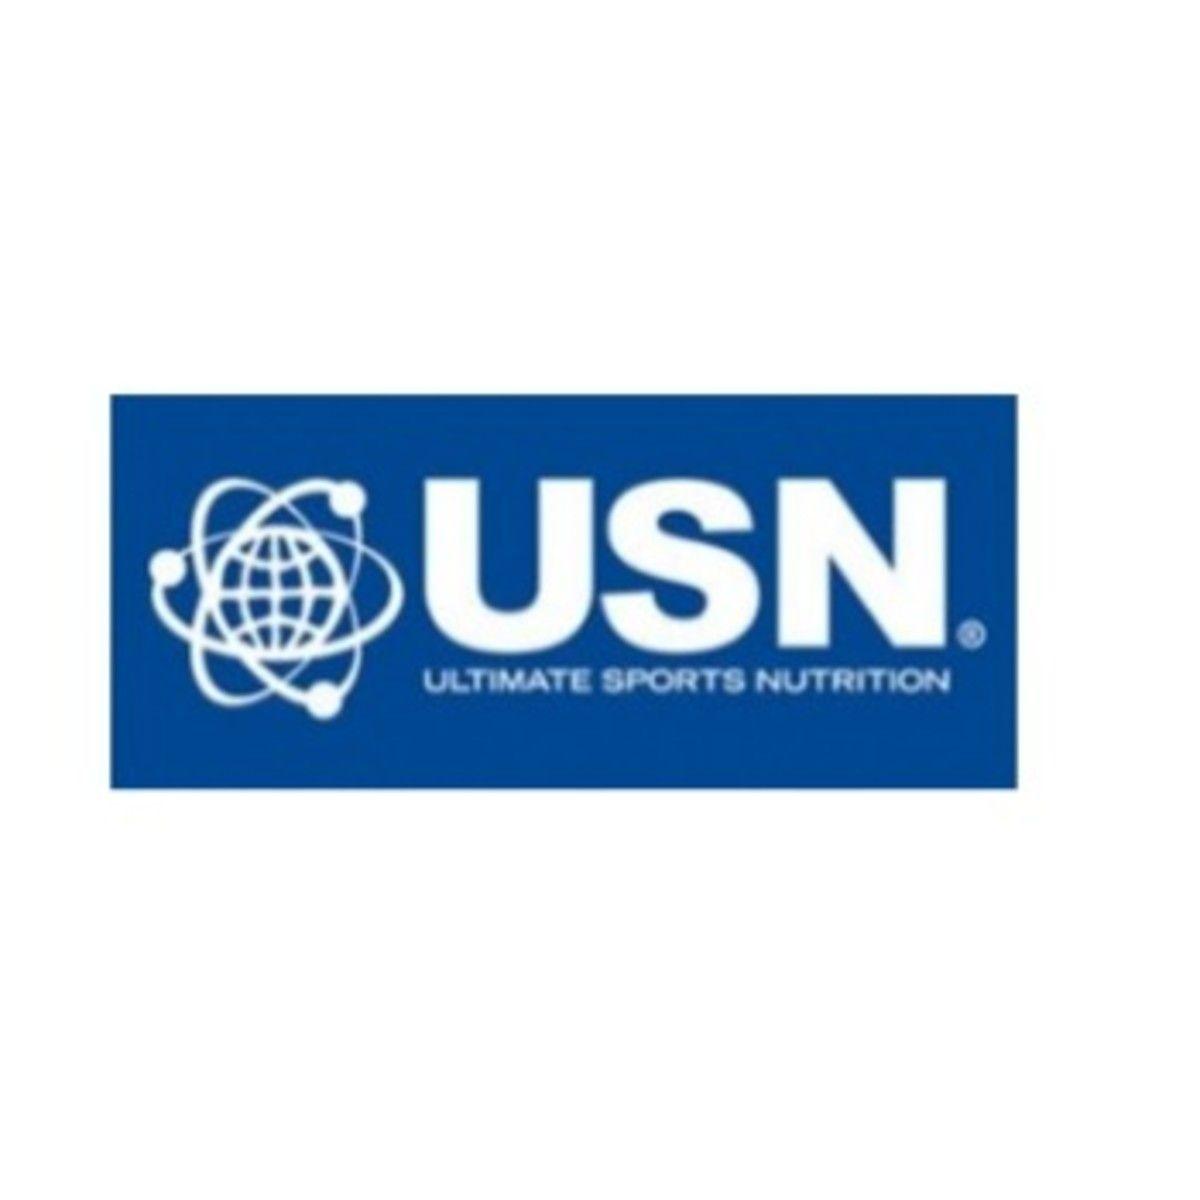 USN Logo - USN launches lean muscle builder protein shake - BikeBiz